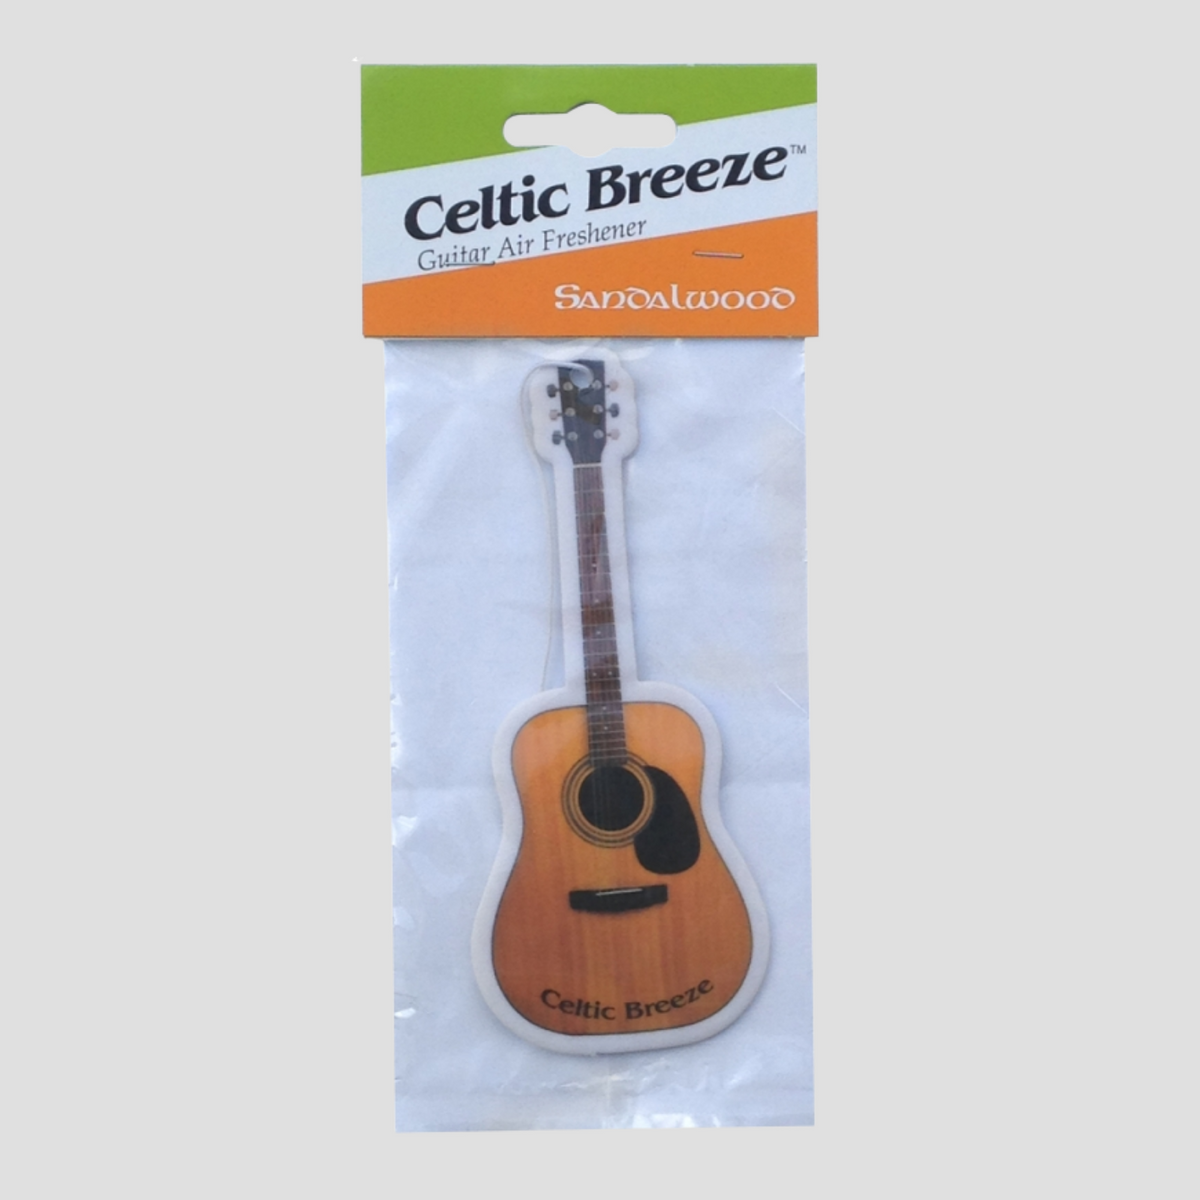 Celtic Breeze Air Freshener : Guitar